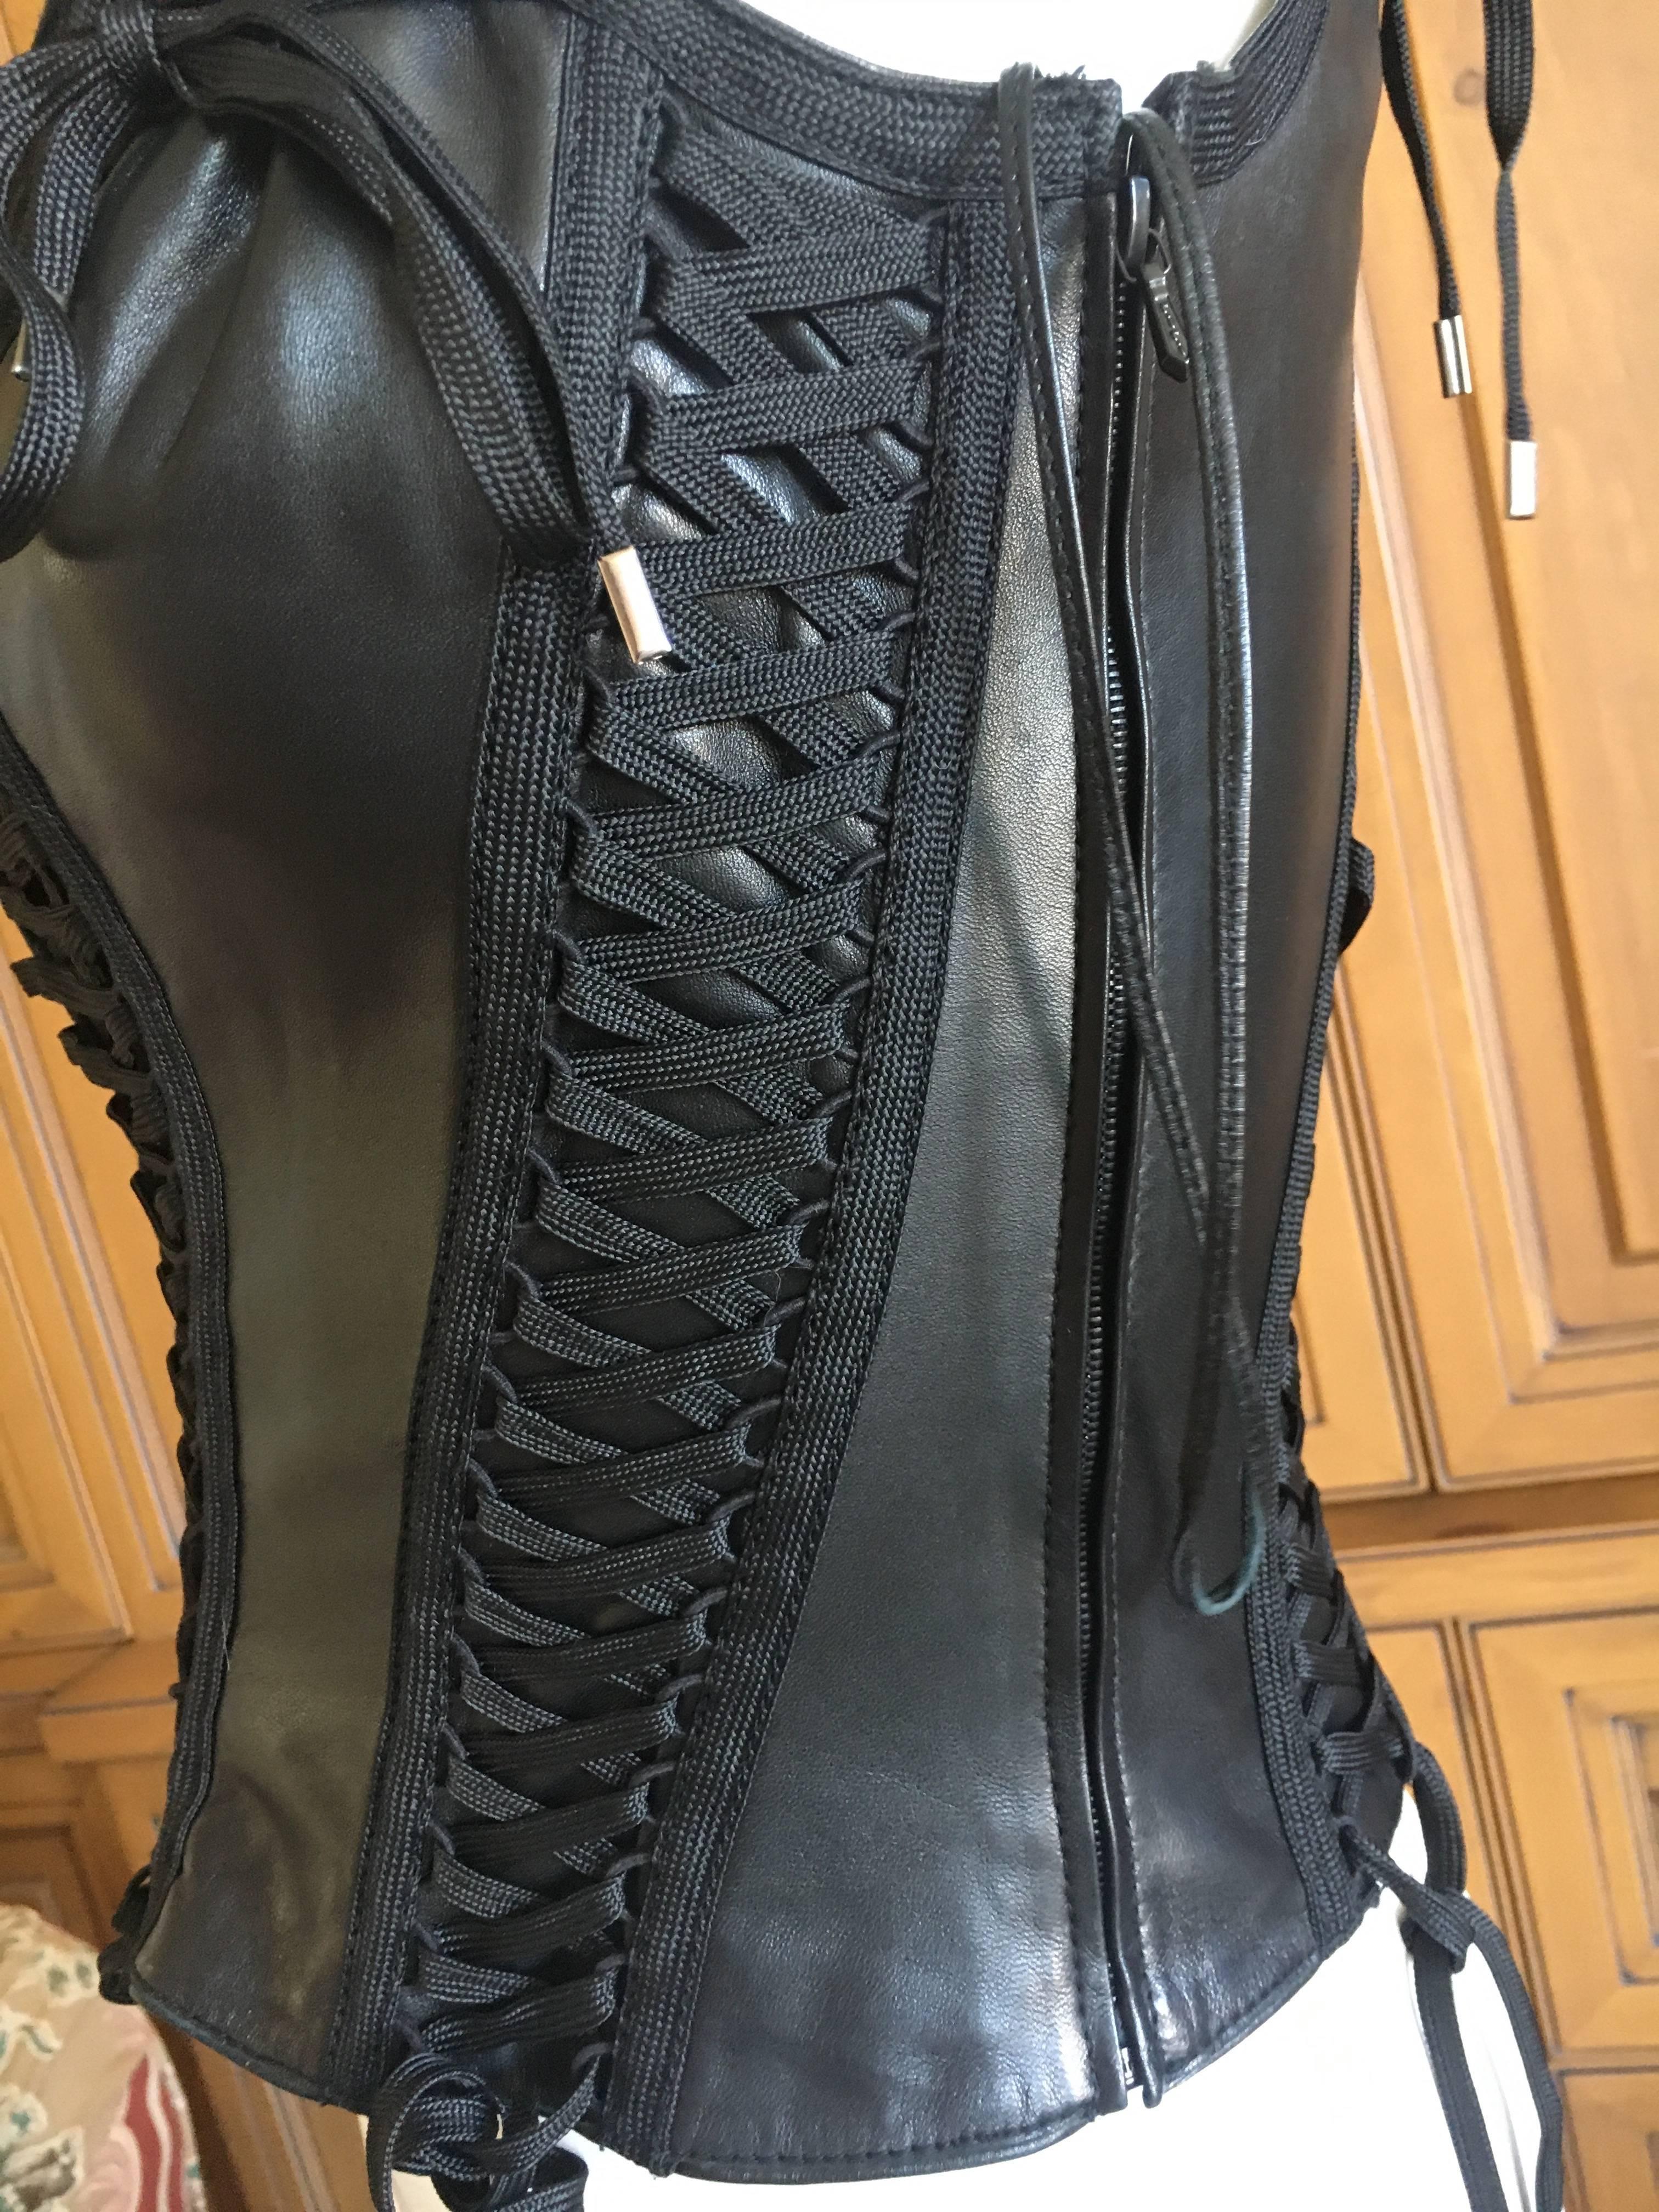 Christian Dior by John Galliano Black Leather Corset Lace Bondage Sleeveless Top 2